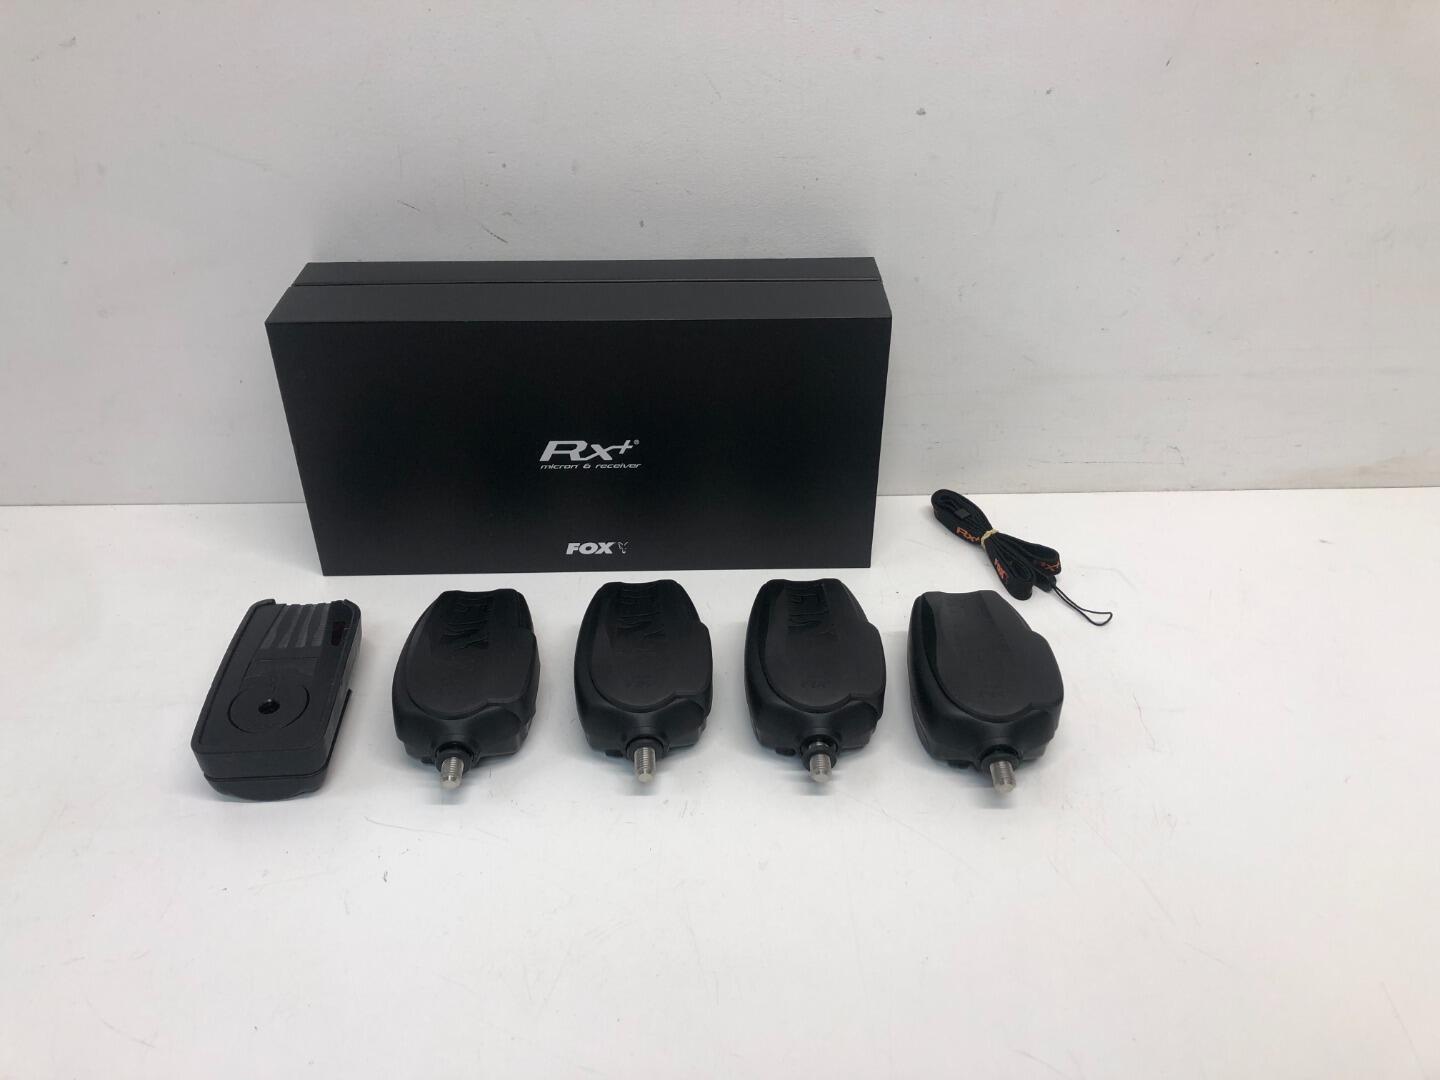 Fox RX+ Bite Alarms 4 Rod Set with Receiver